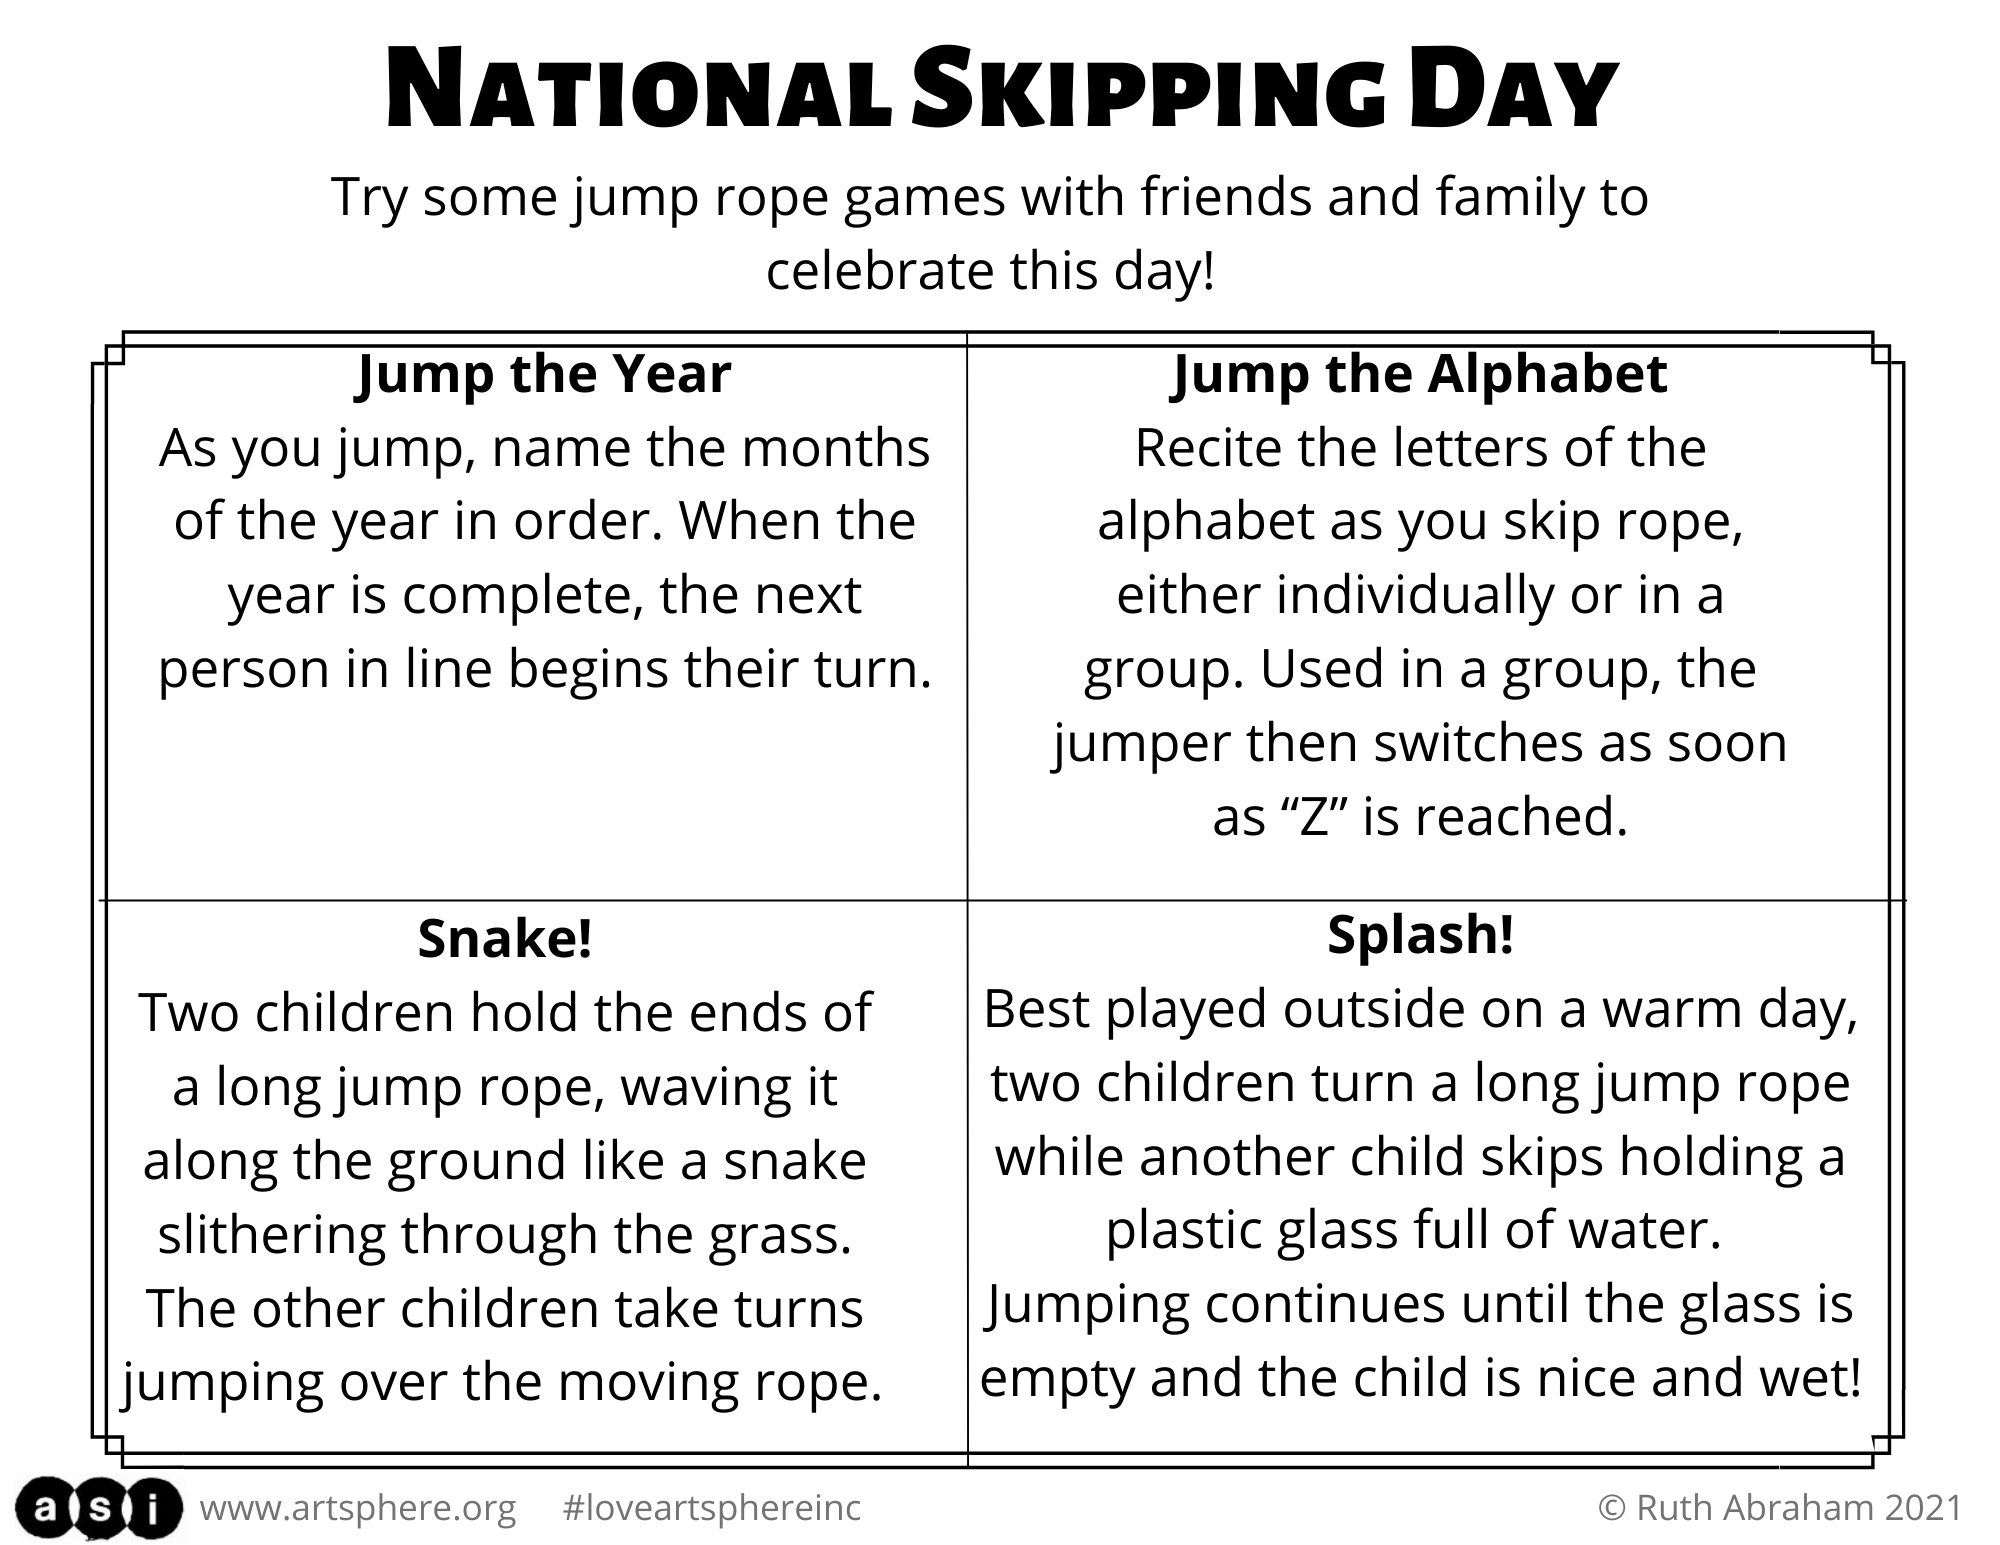 National Skipping Day Art Sphere Inc.